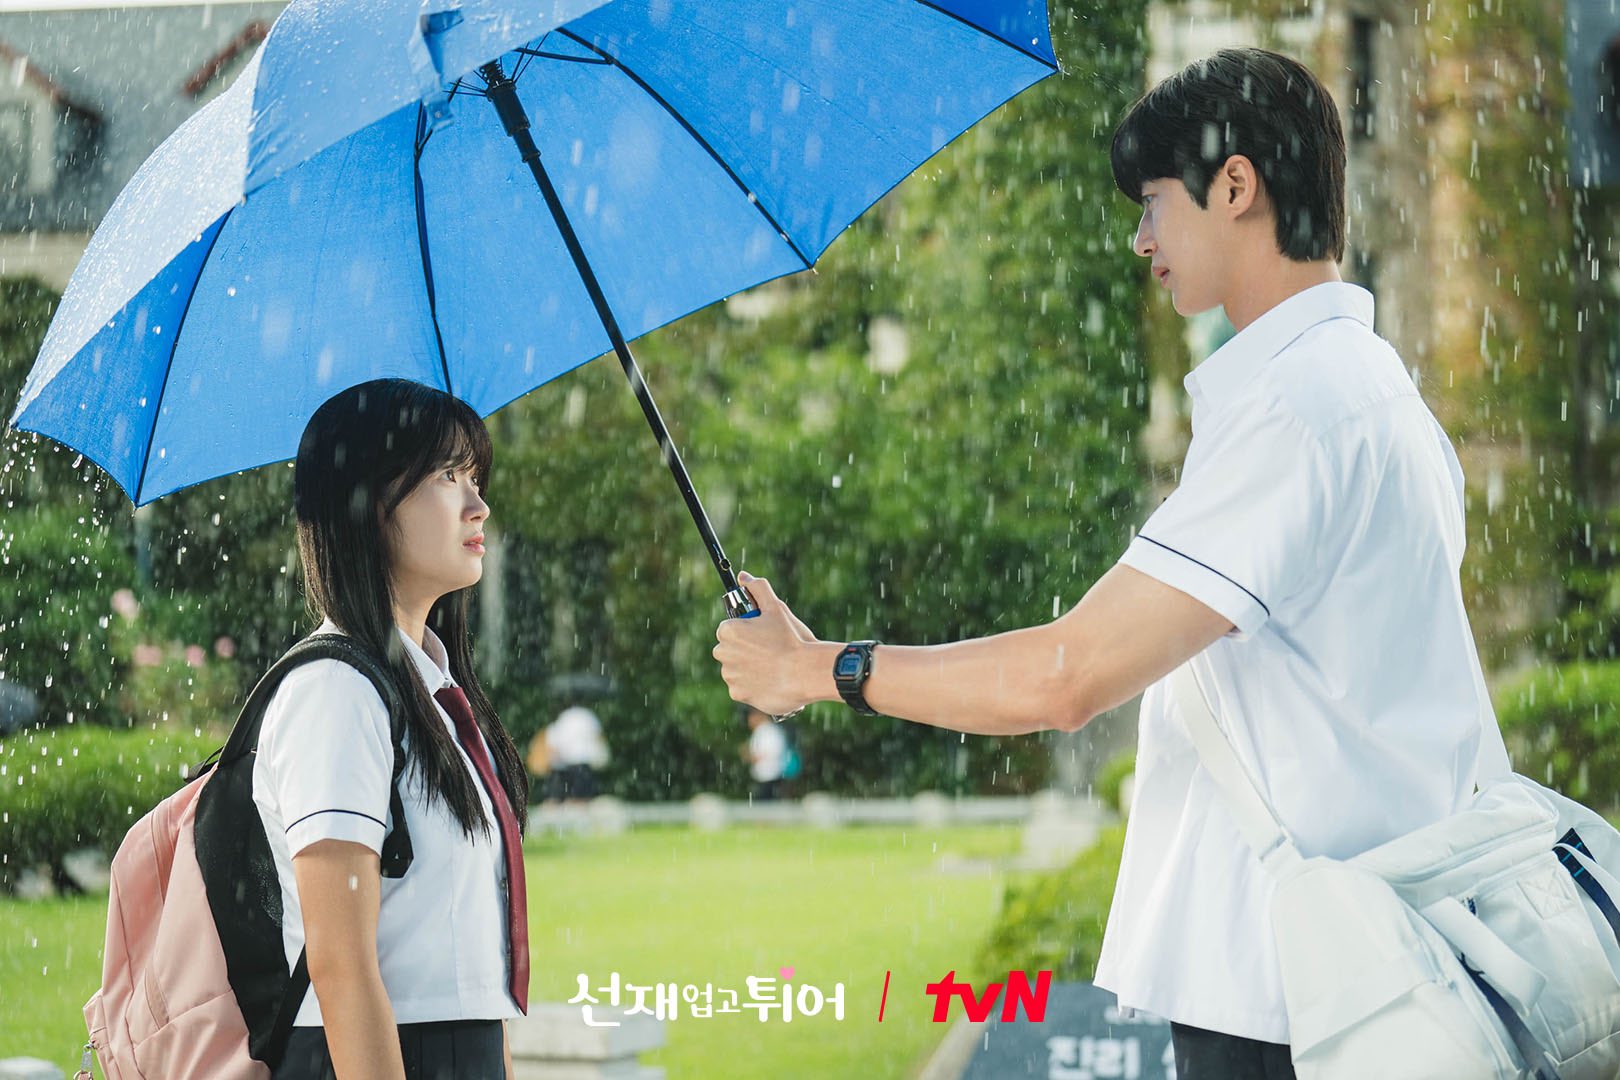 Kim Hye Yoon And Byun Woo Seok Share A Tearful Reunion In The Rain On 